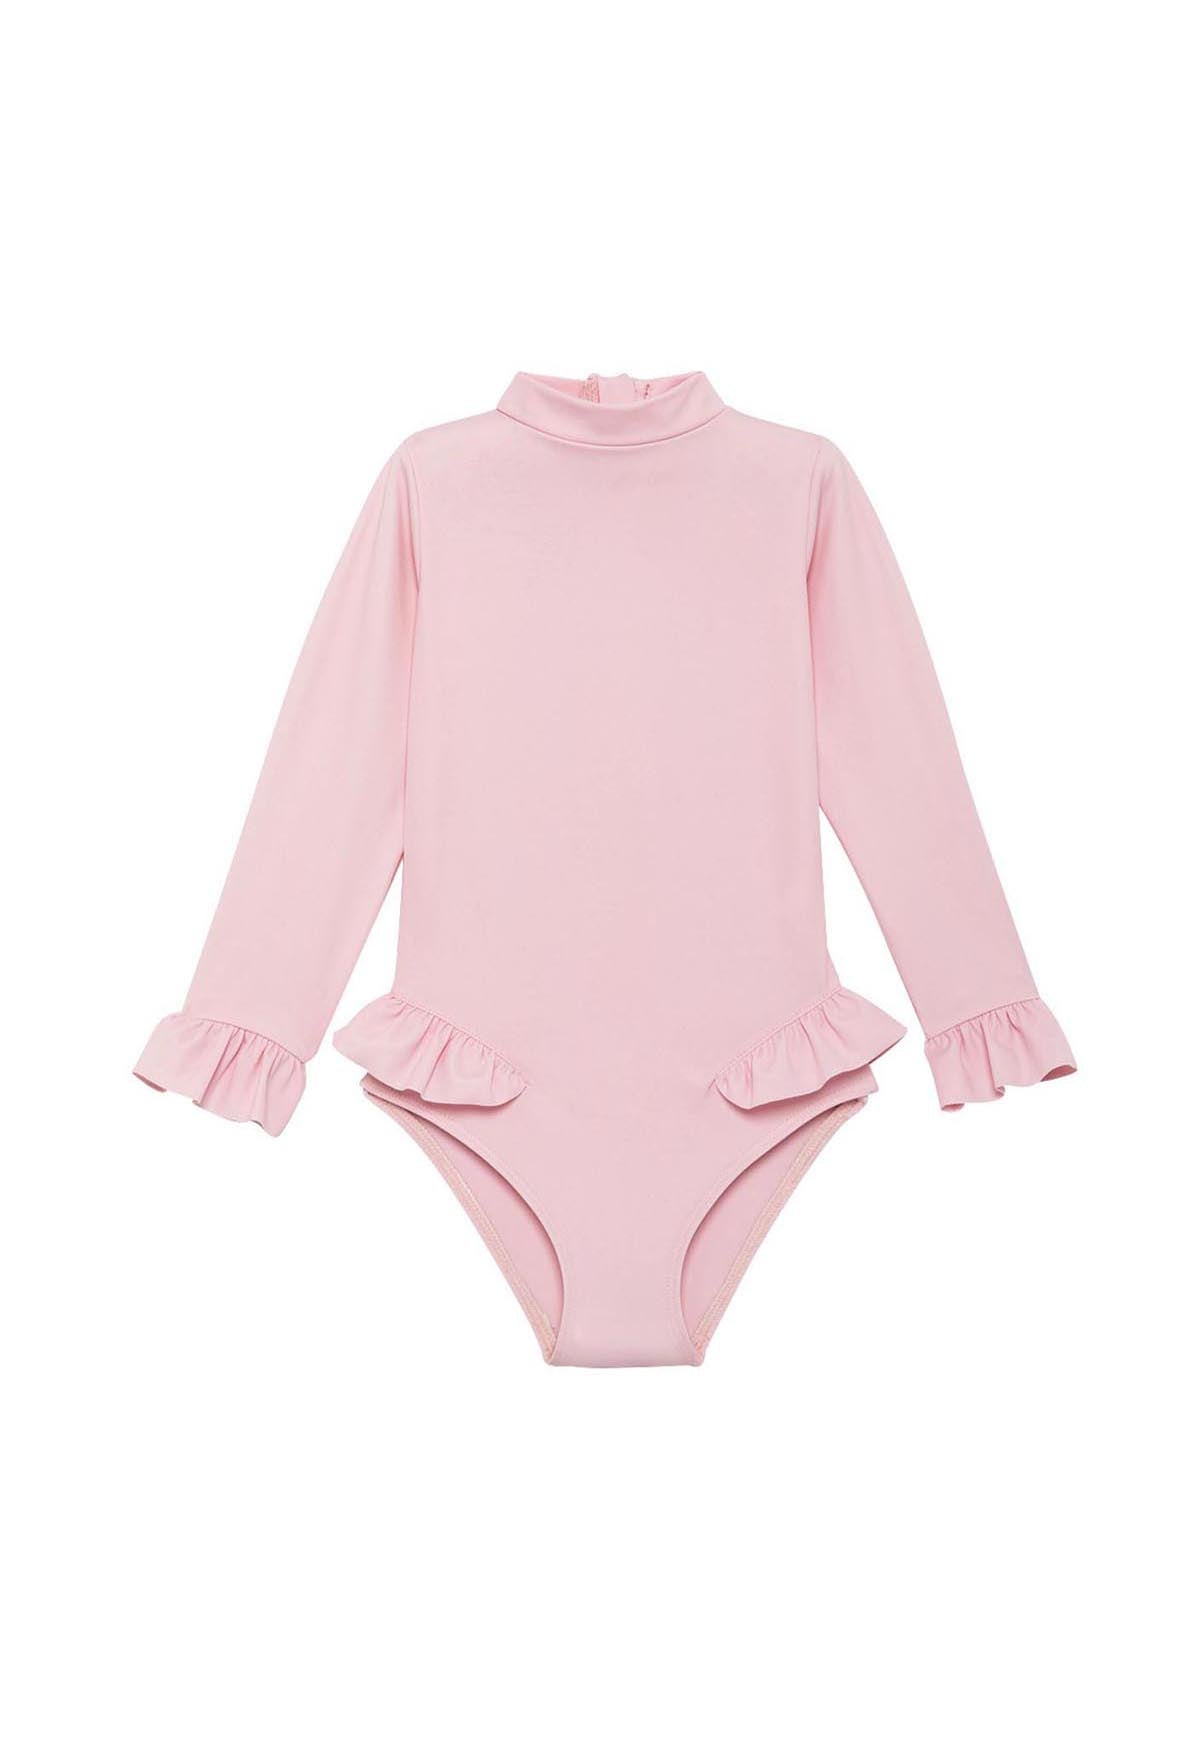 Long sleeve baby swimsuit, UPF50+, light pink